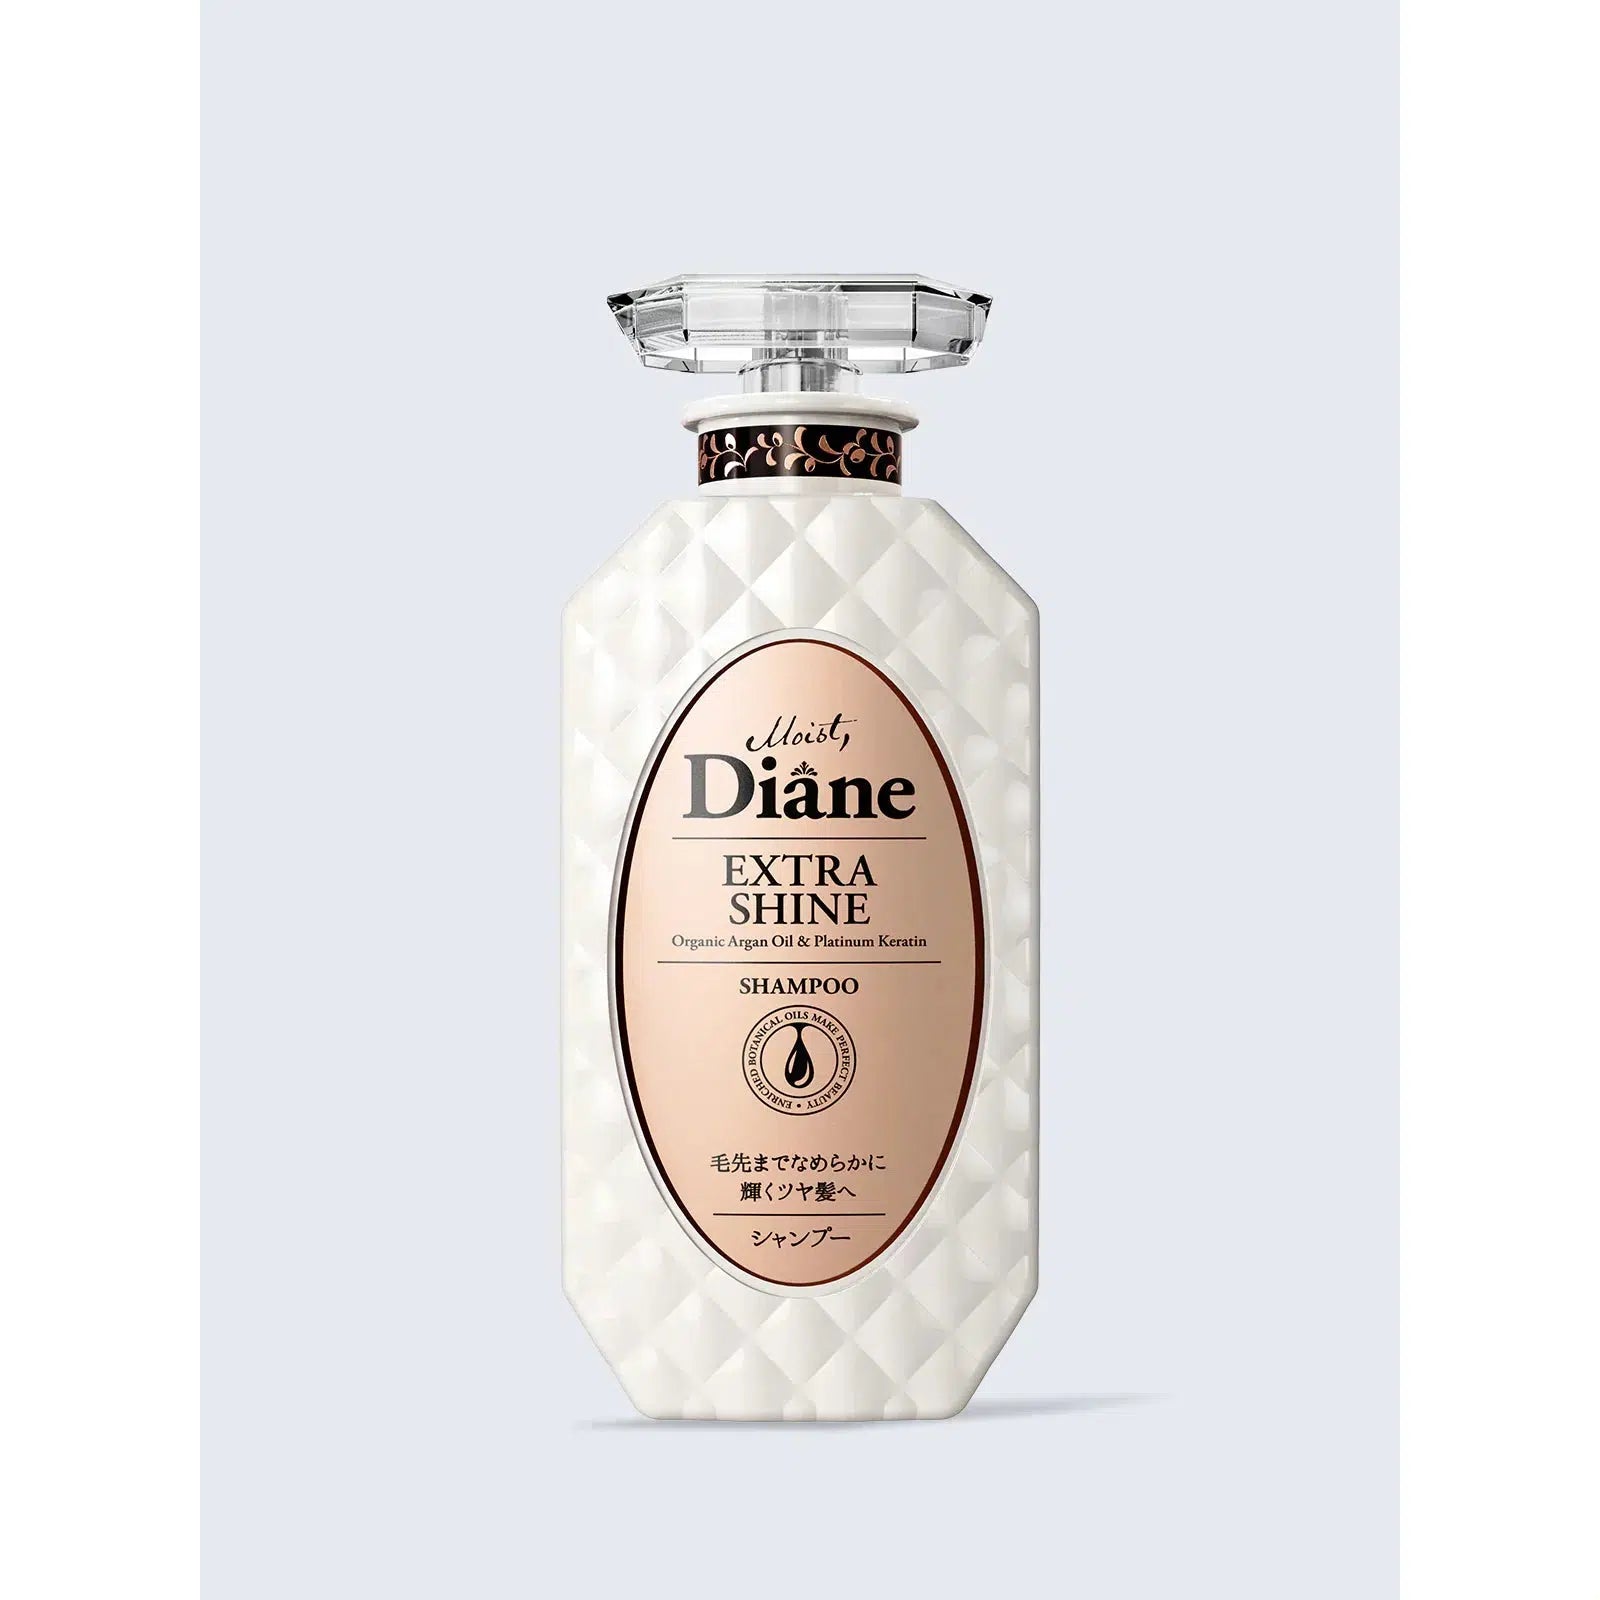 Moist-Diane-Shampoo-Extra-Shine-Glossy-Hair-Organic-Argan-Oil-and-Keratin-450ml-1-2023-11-20T01:23:51.434Z.webp